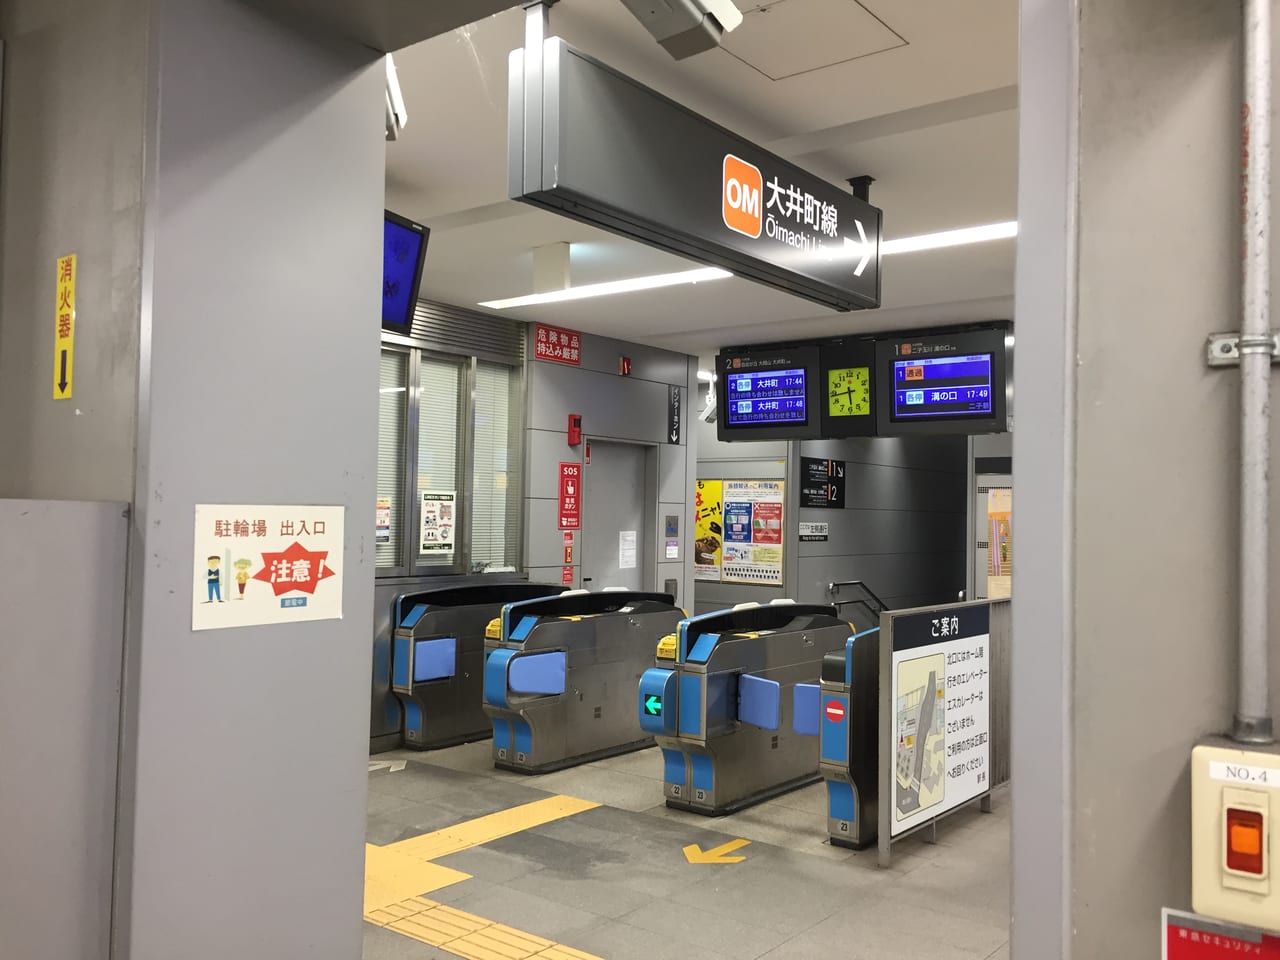 20220905 大井町線上野毛駅の改札